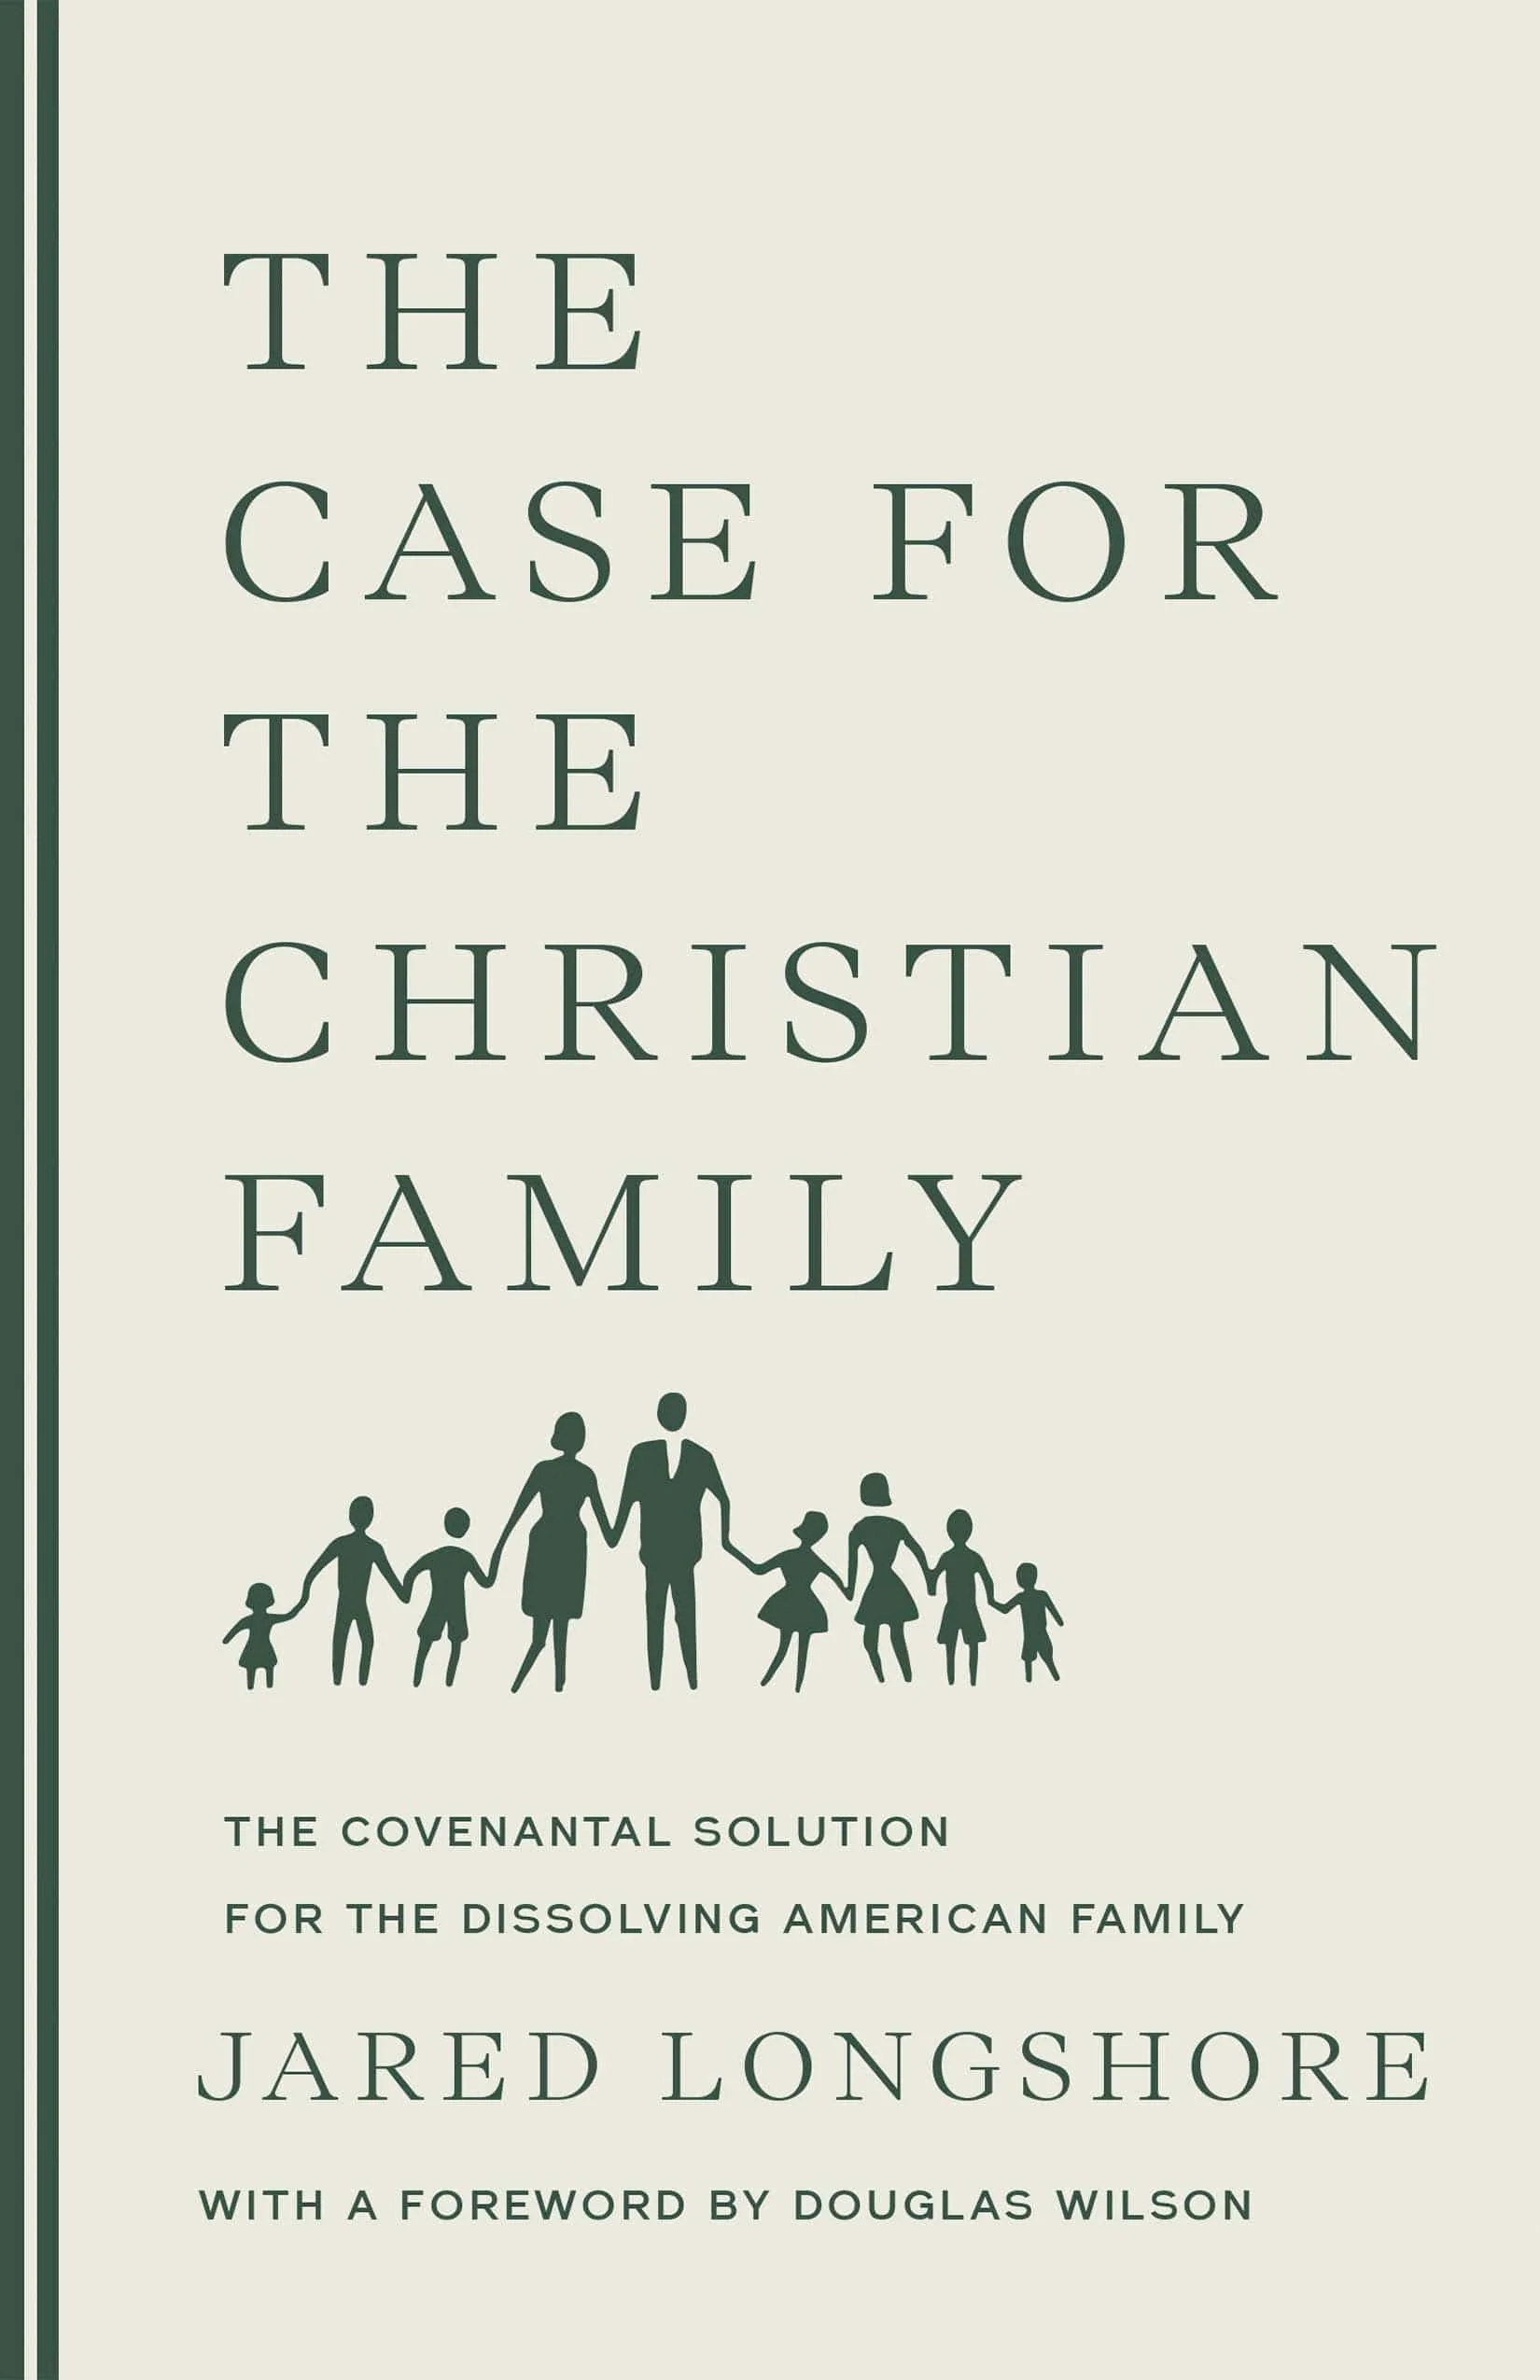 jared-longshore-books-paperback-the-case-for-the-christian-family-30952068874288